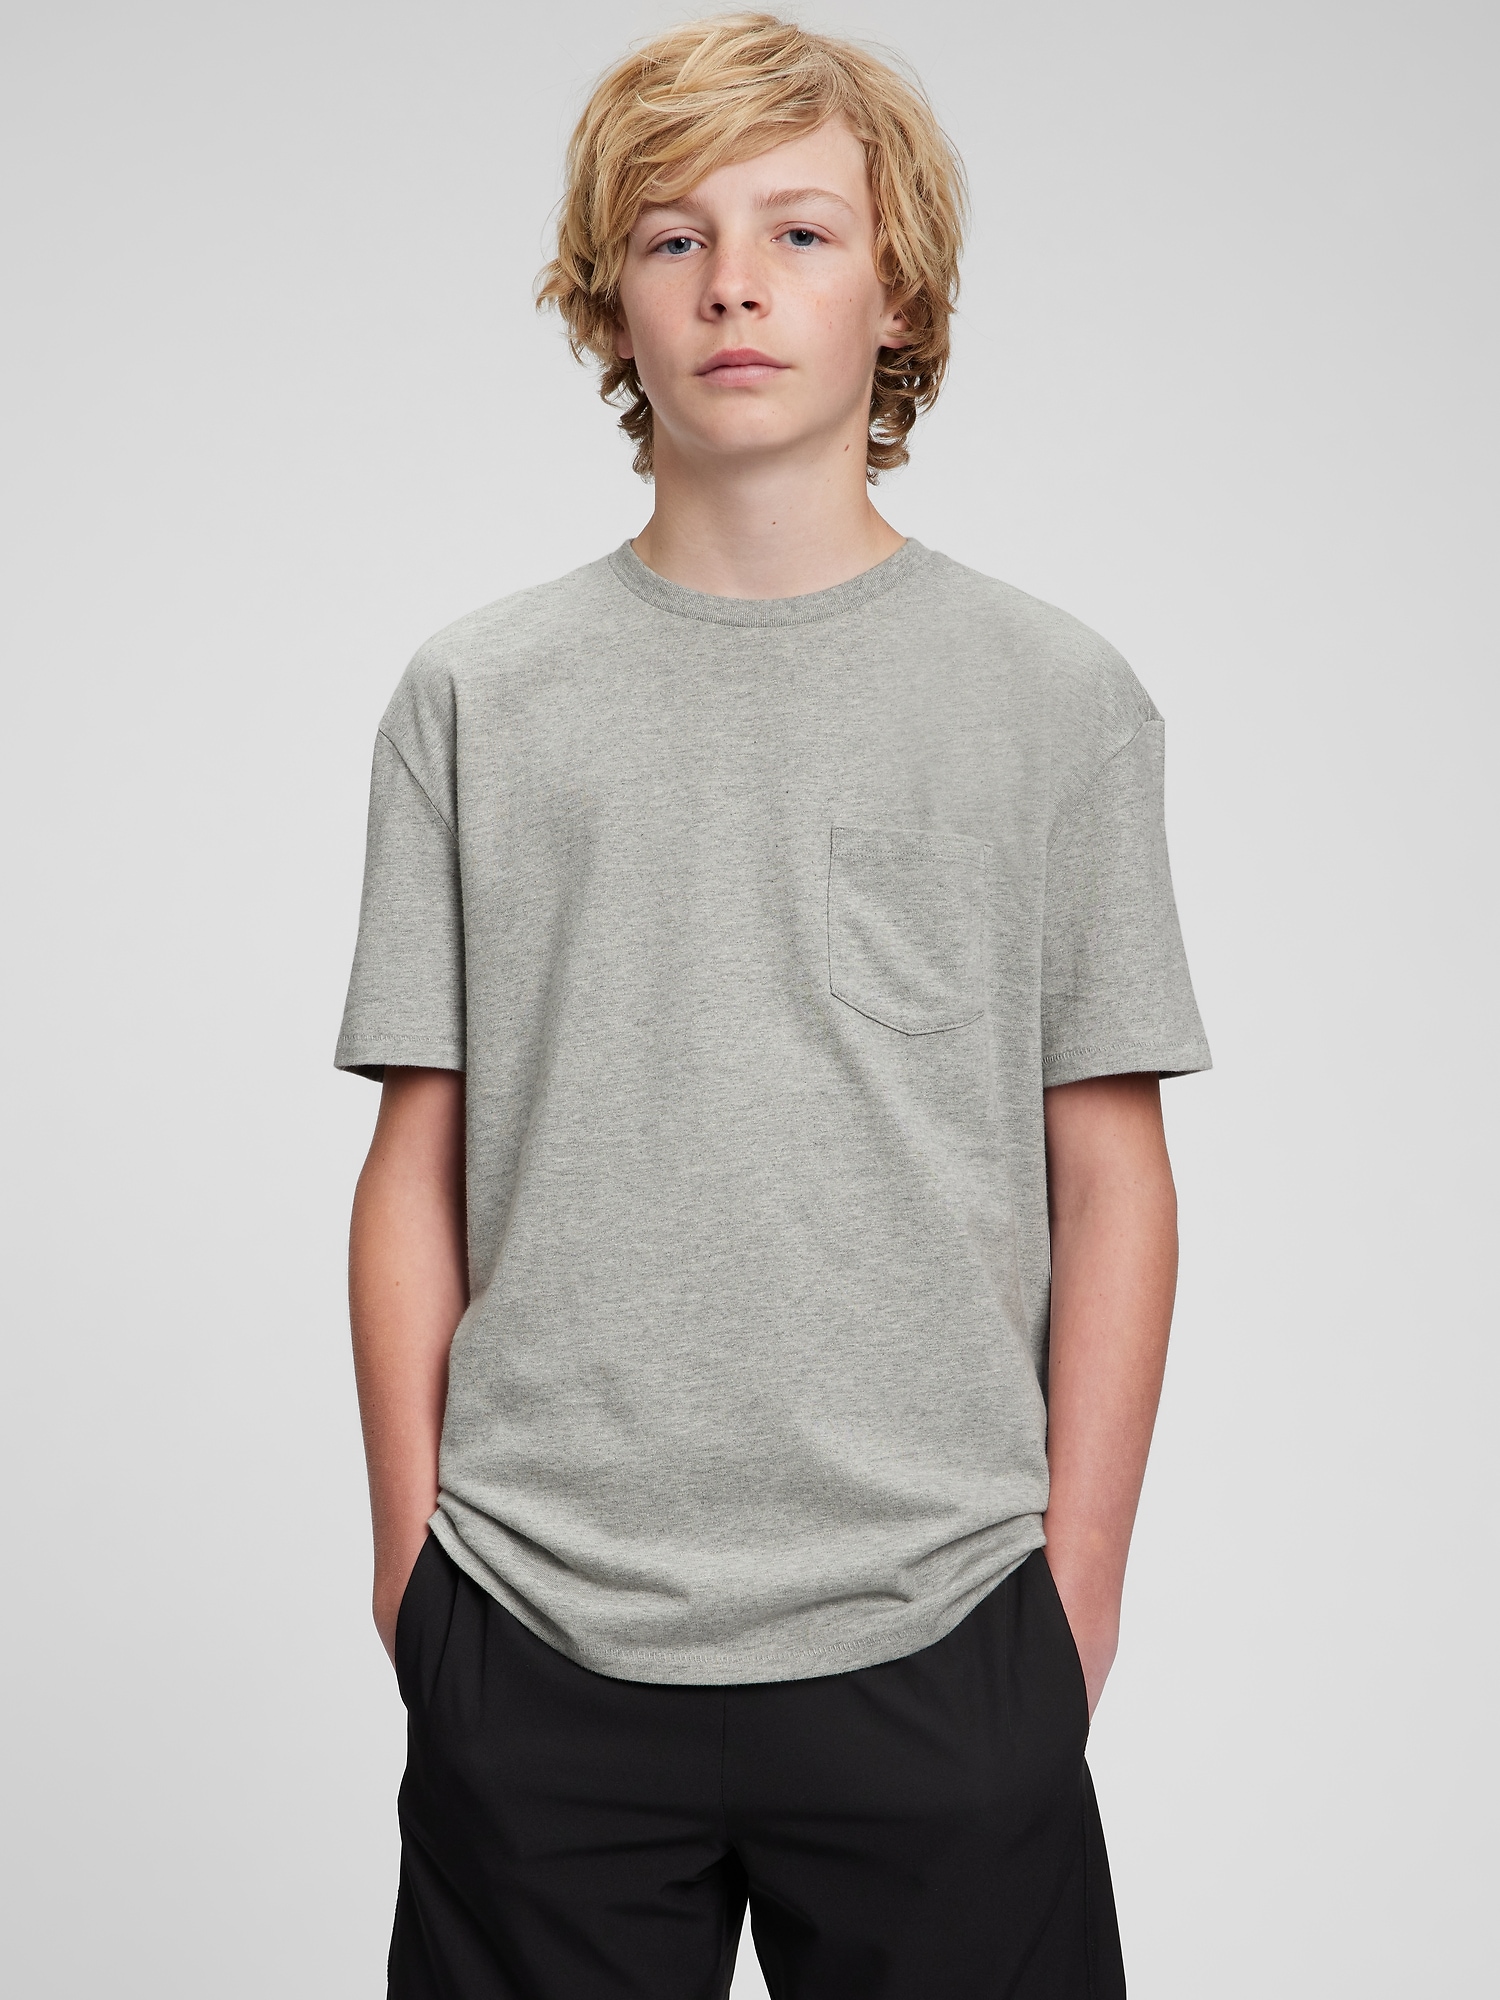 Gap Teen 100% Organic Cotton Pocket T-Shirt gray. 1